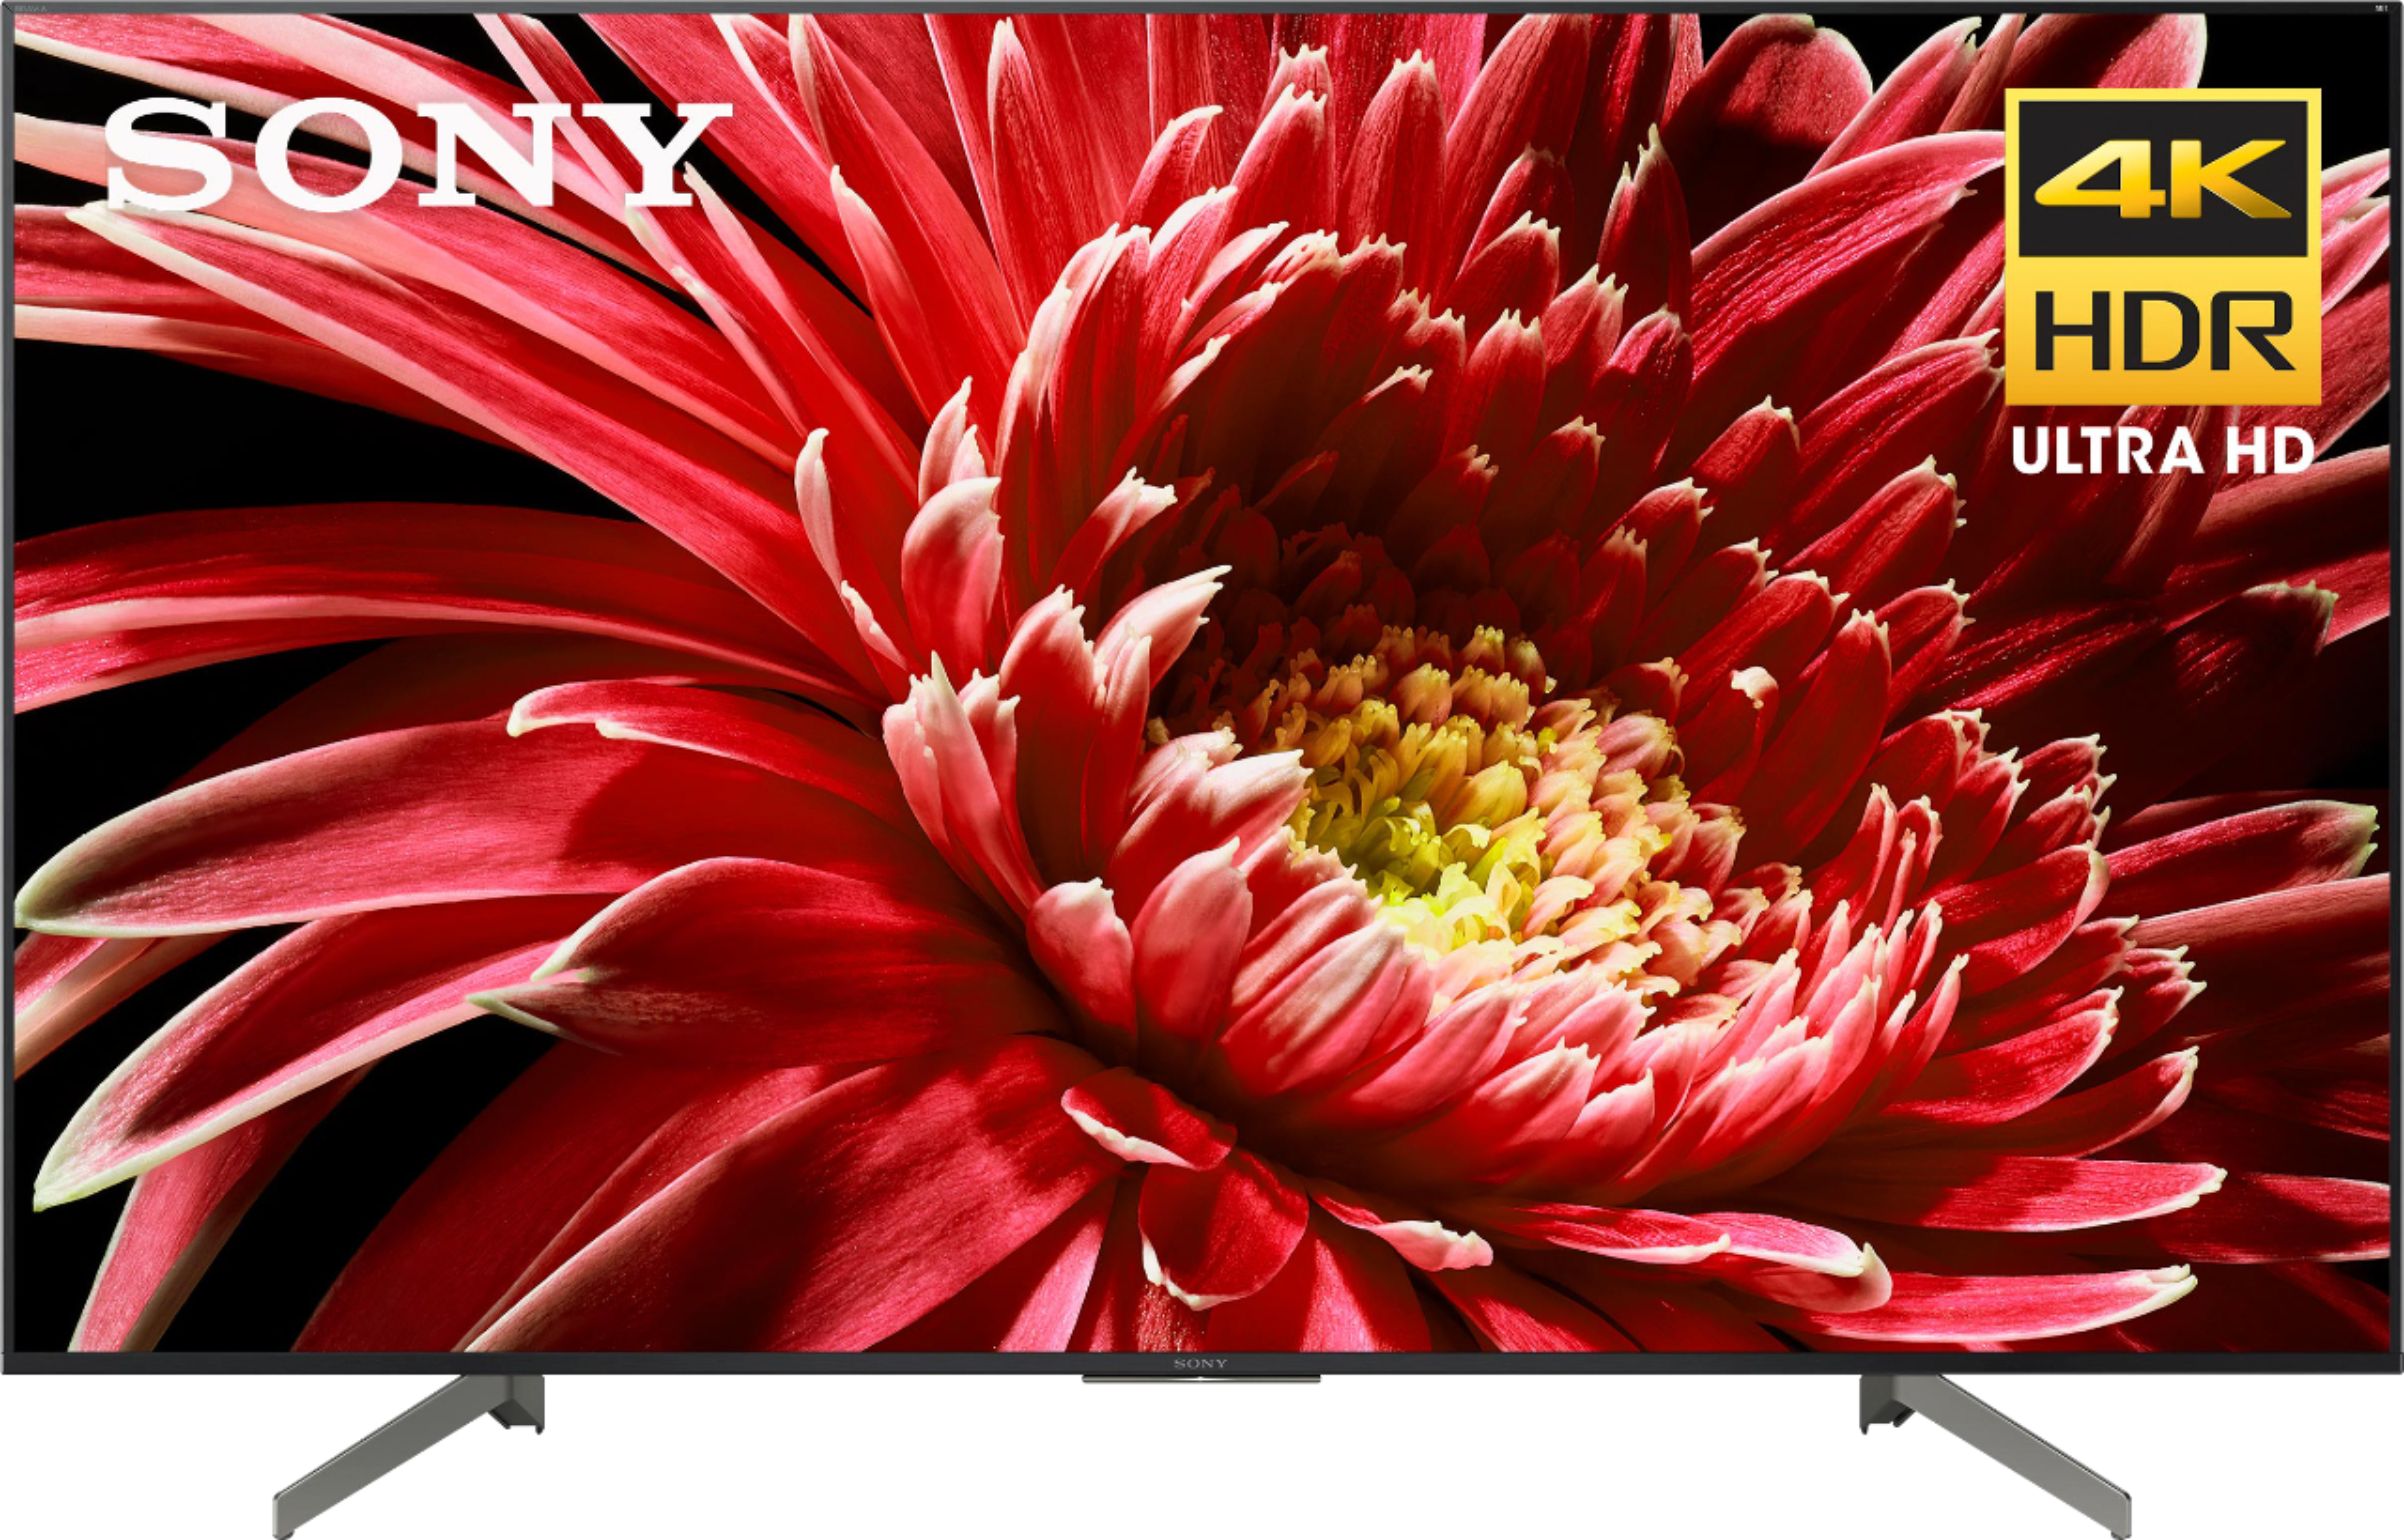 TV Sony 55 Pulgadas 4K Ultra HD Smart TV LED XBR-55X850G